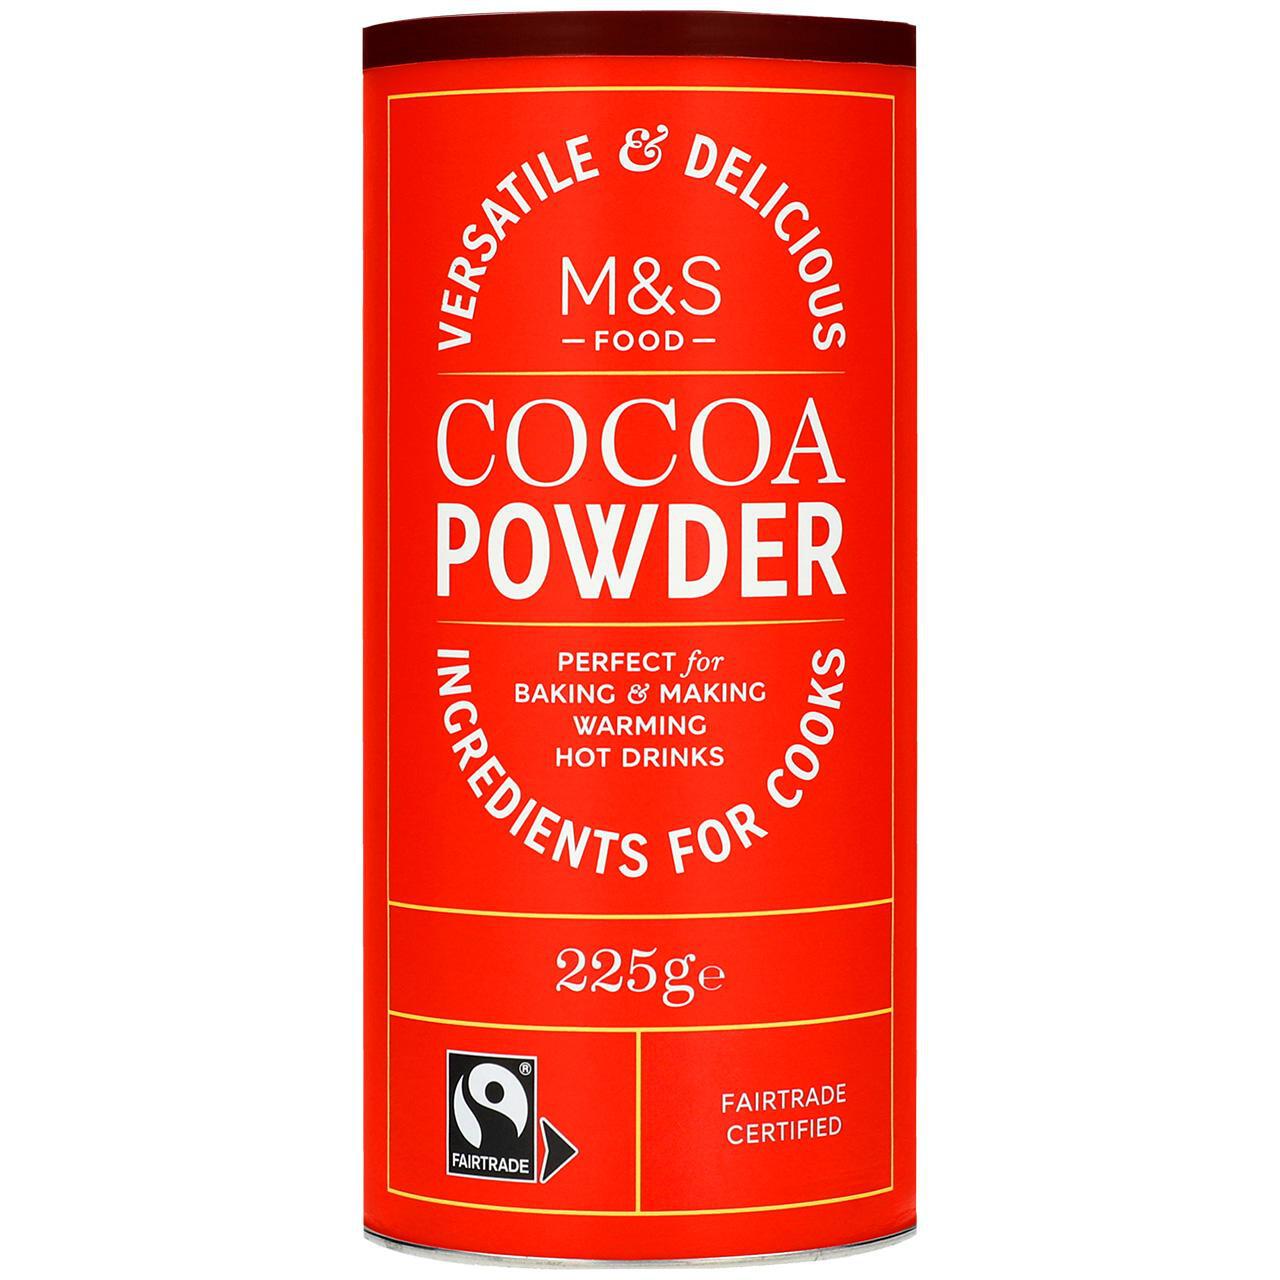 M&S Fairtrade Cocoa Powder 225g